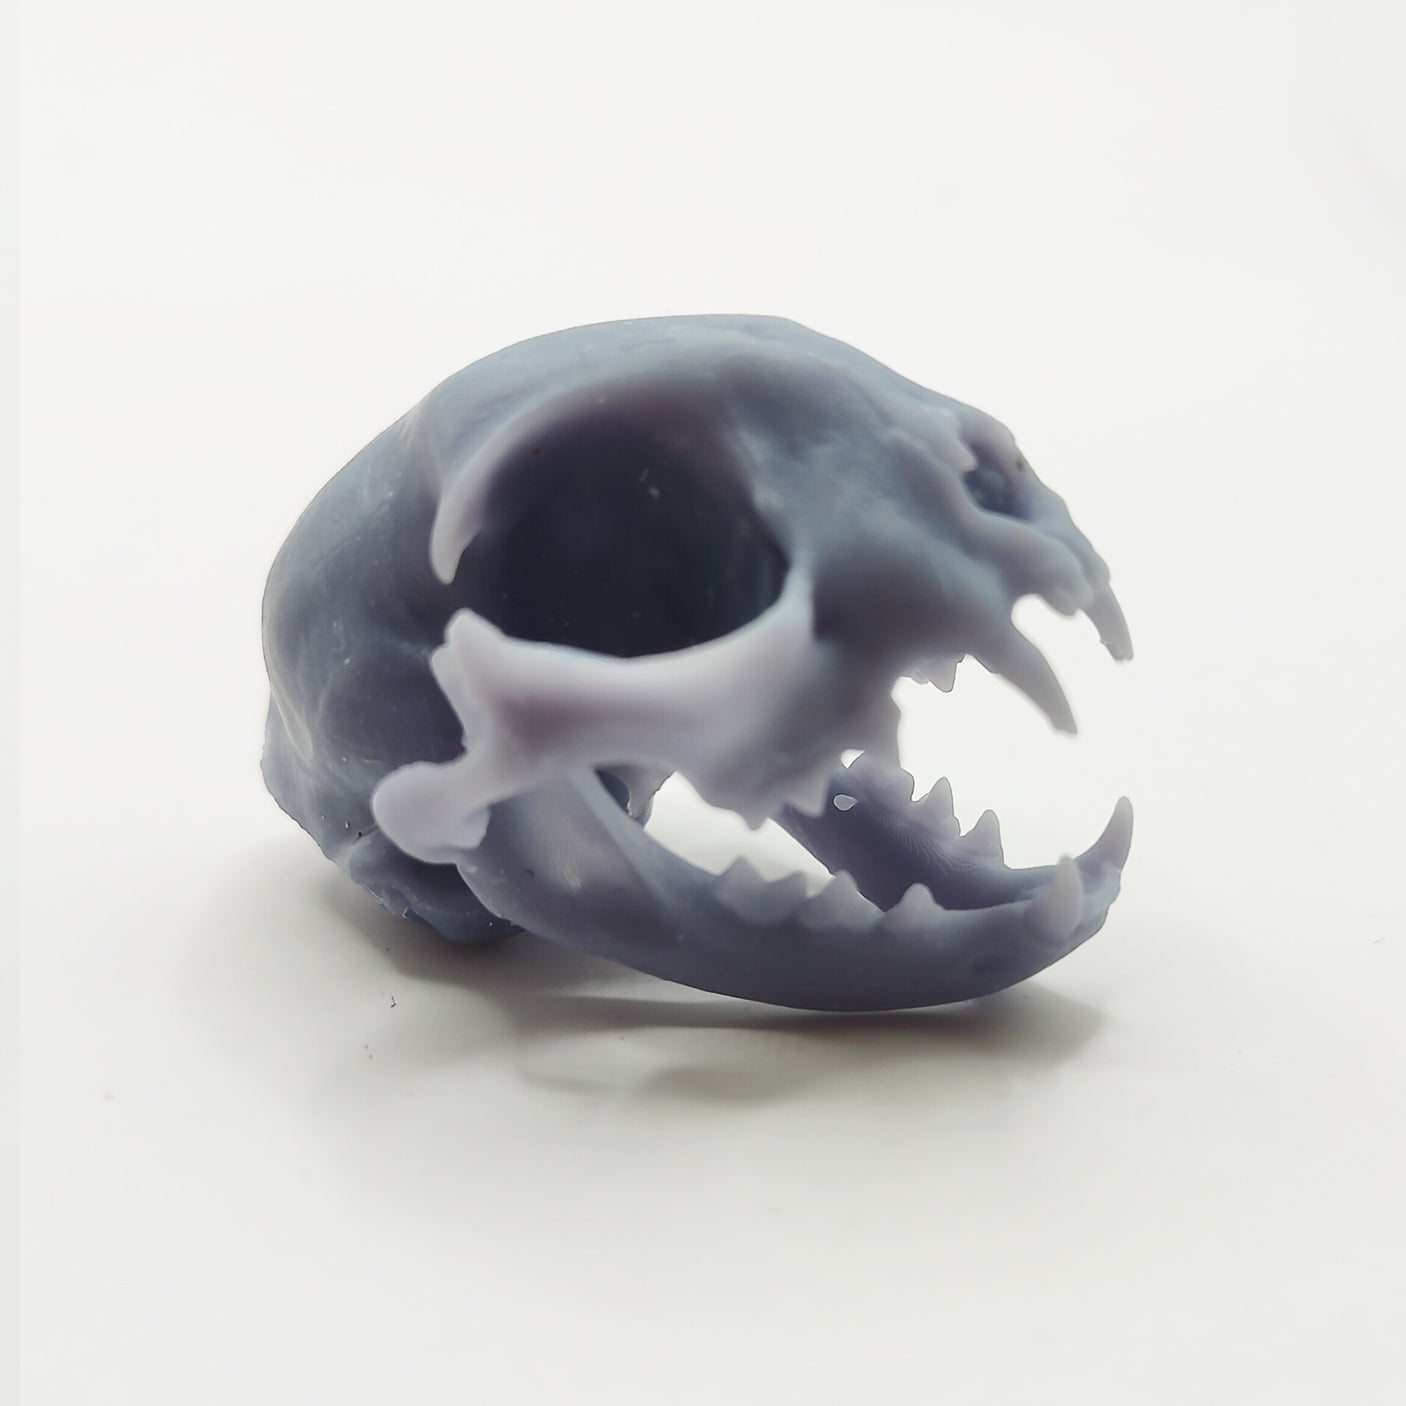 Miniature Cat Skull open 1:6 scale.